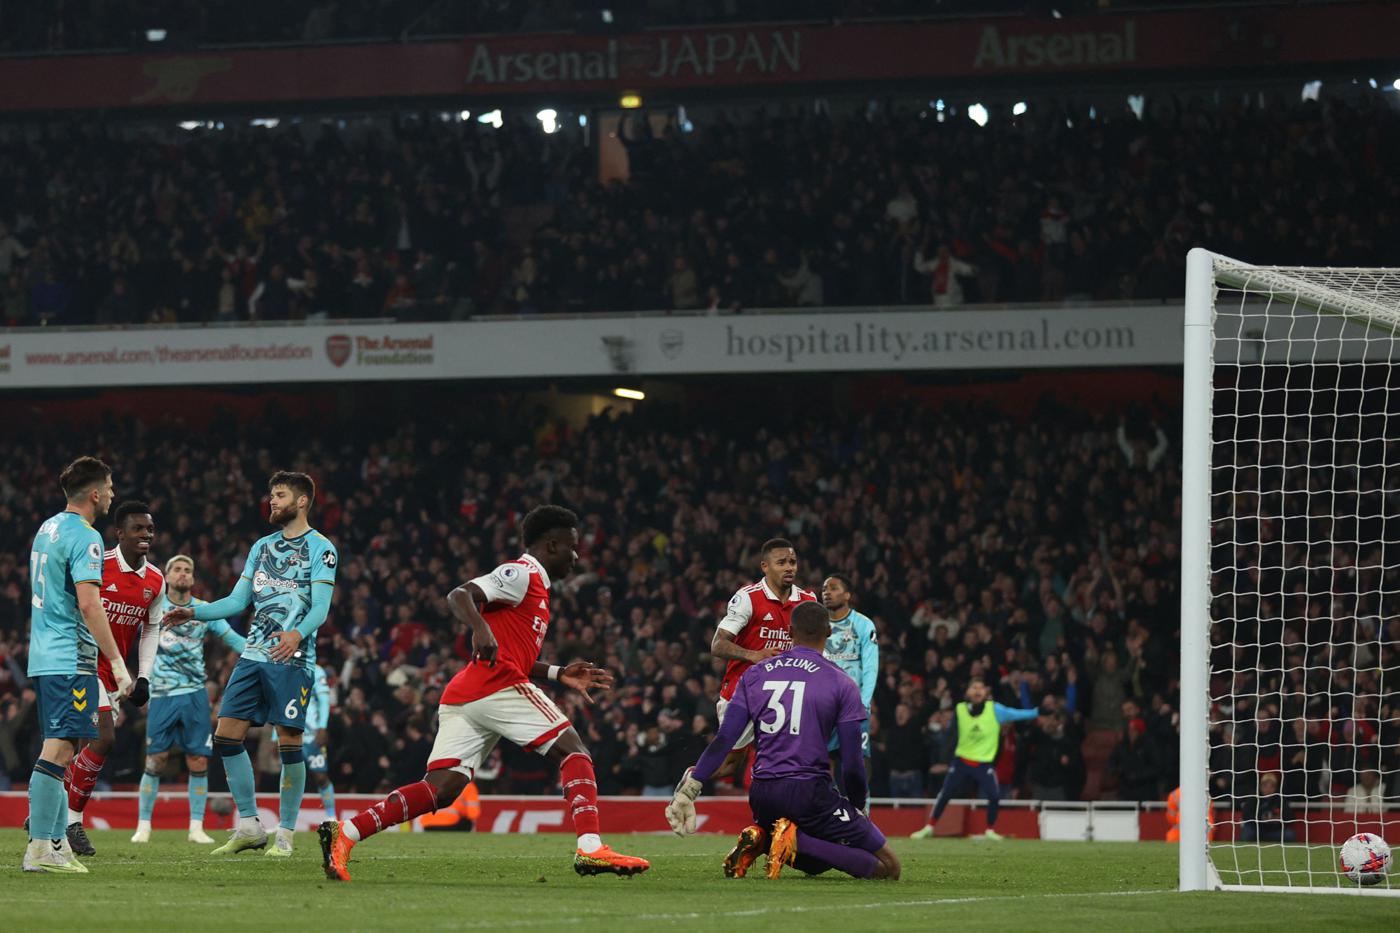 Arsenal v Southampton - 3-3. English Championship, round of 32. Match Review, Statistics